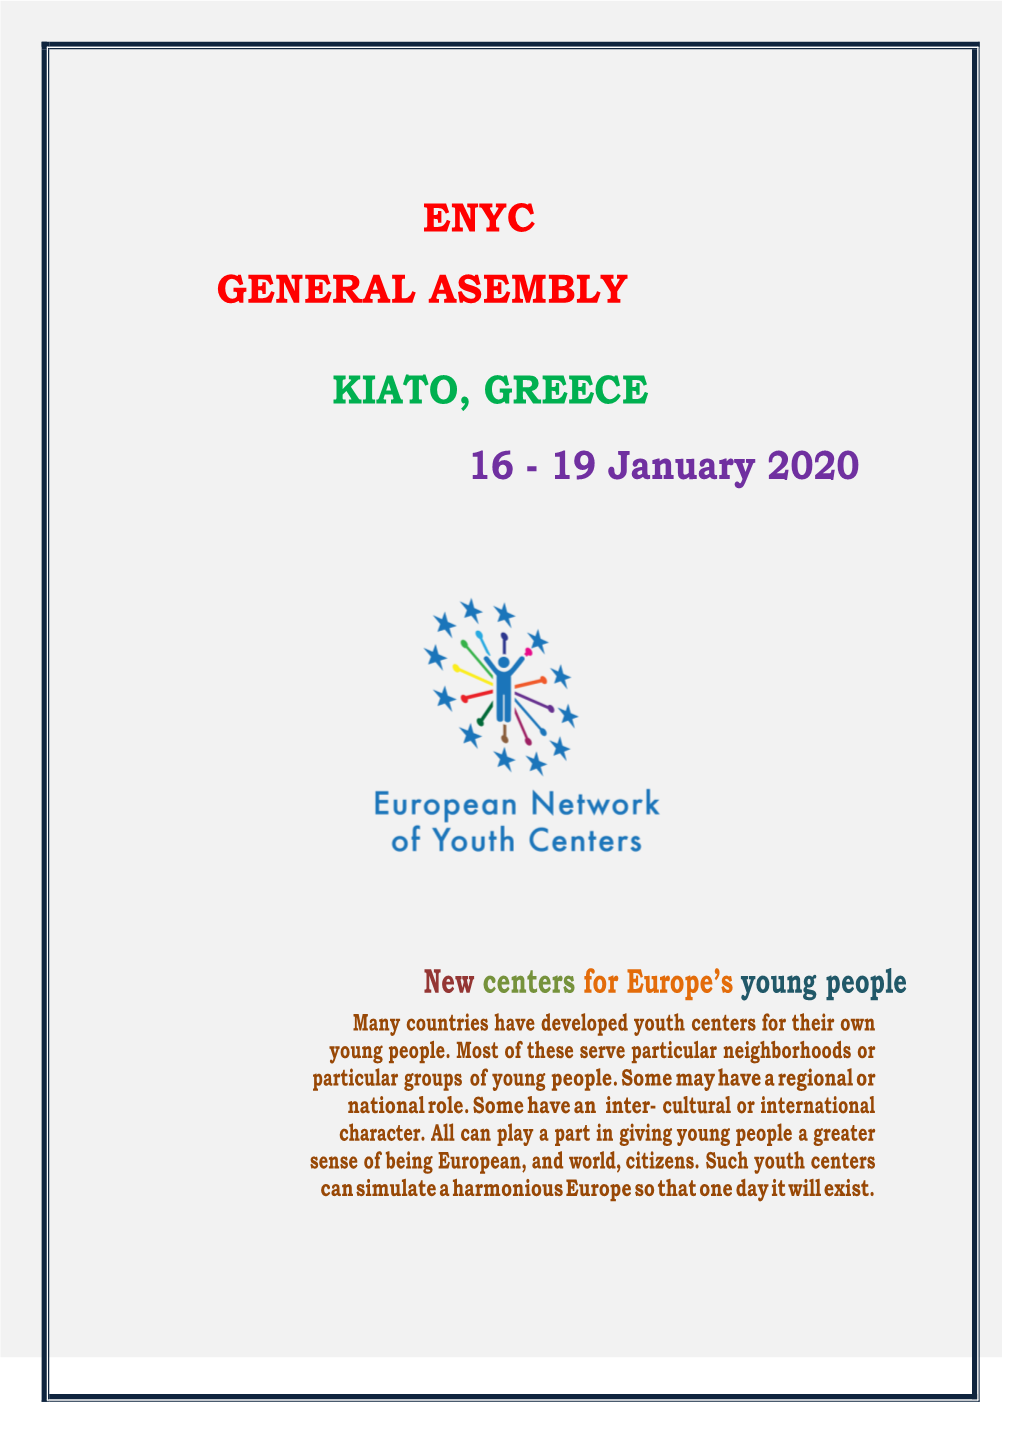 Enyc General Asembly Kiato, Greece 16